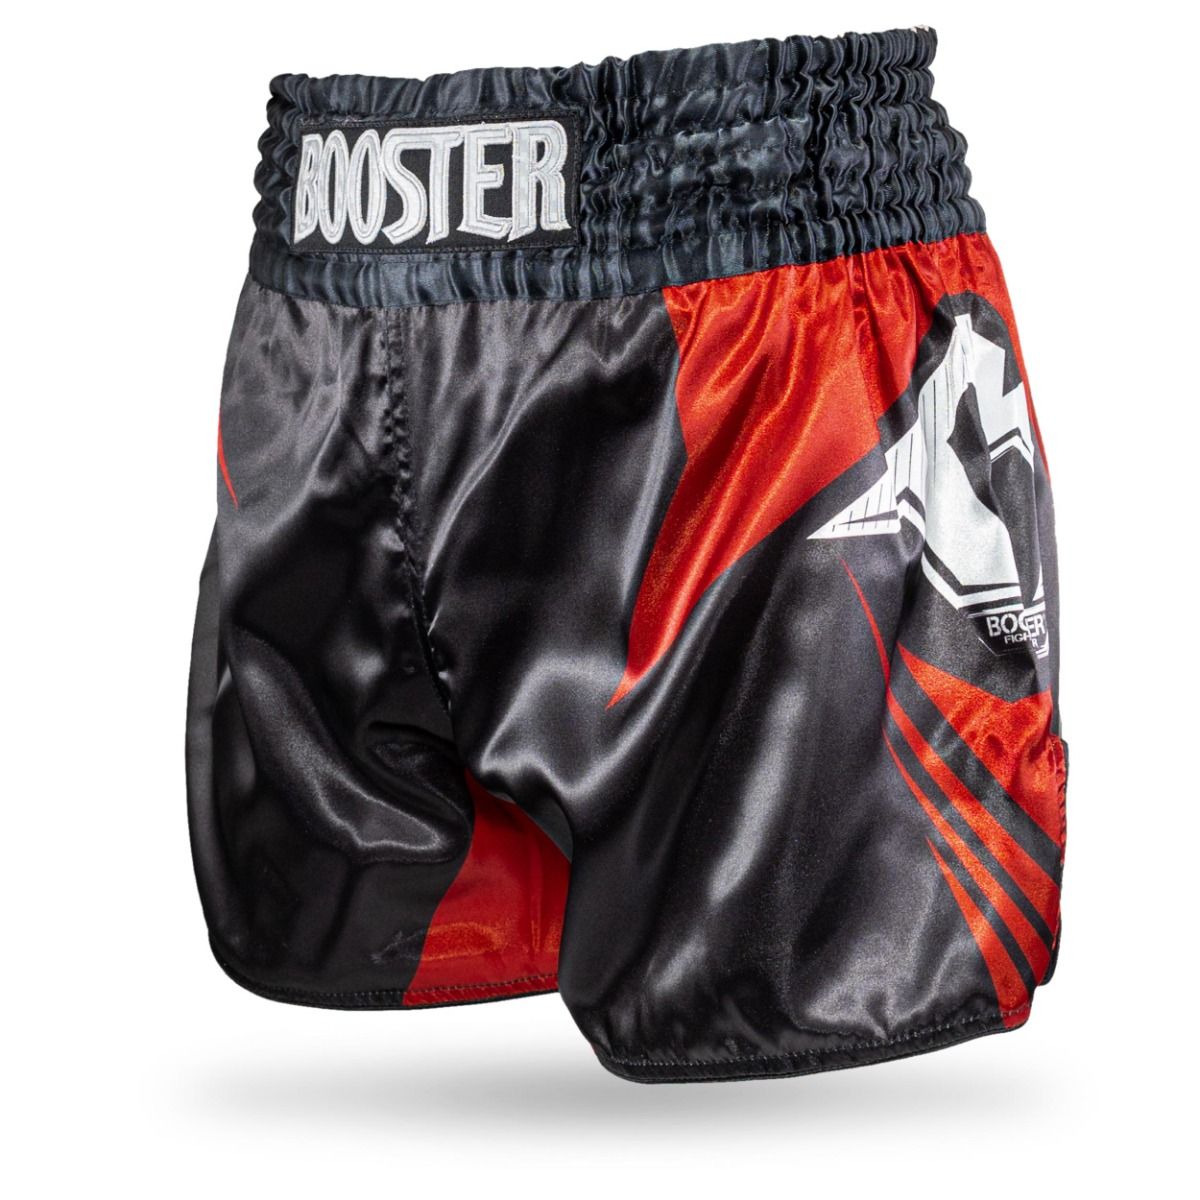 Booster Muay Thai Shorts - AD Xplosion 2